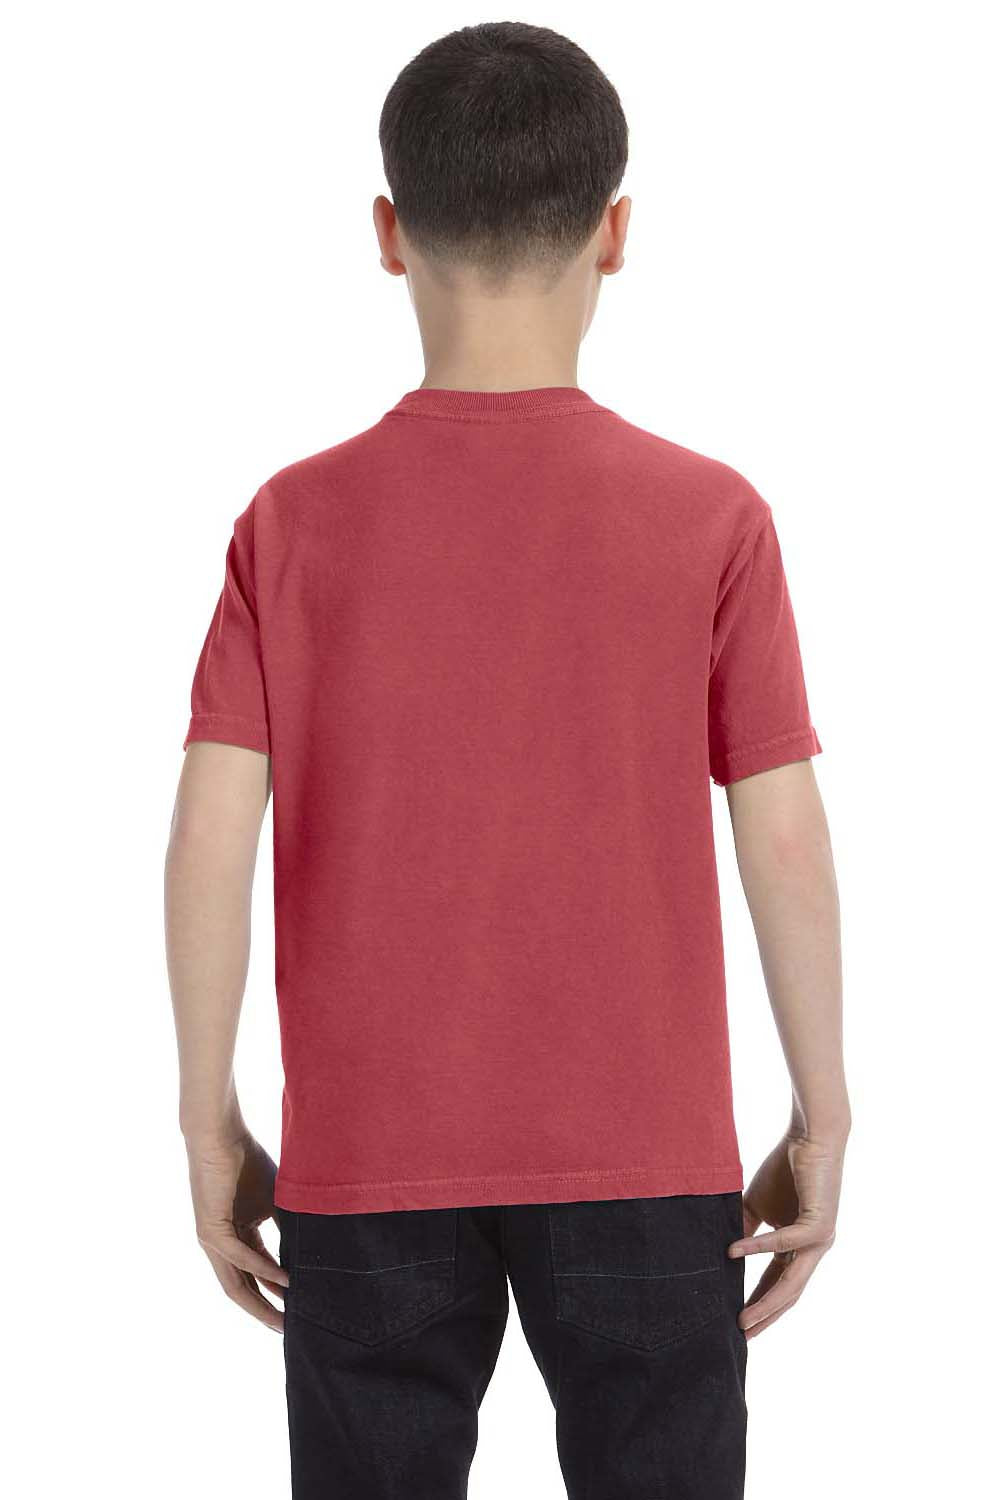 Comfort Colors C9018 Youth Short Sleeve Crewneck T-Shirt Crimson Red Back